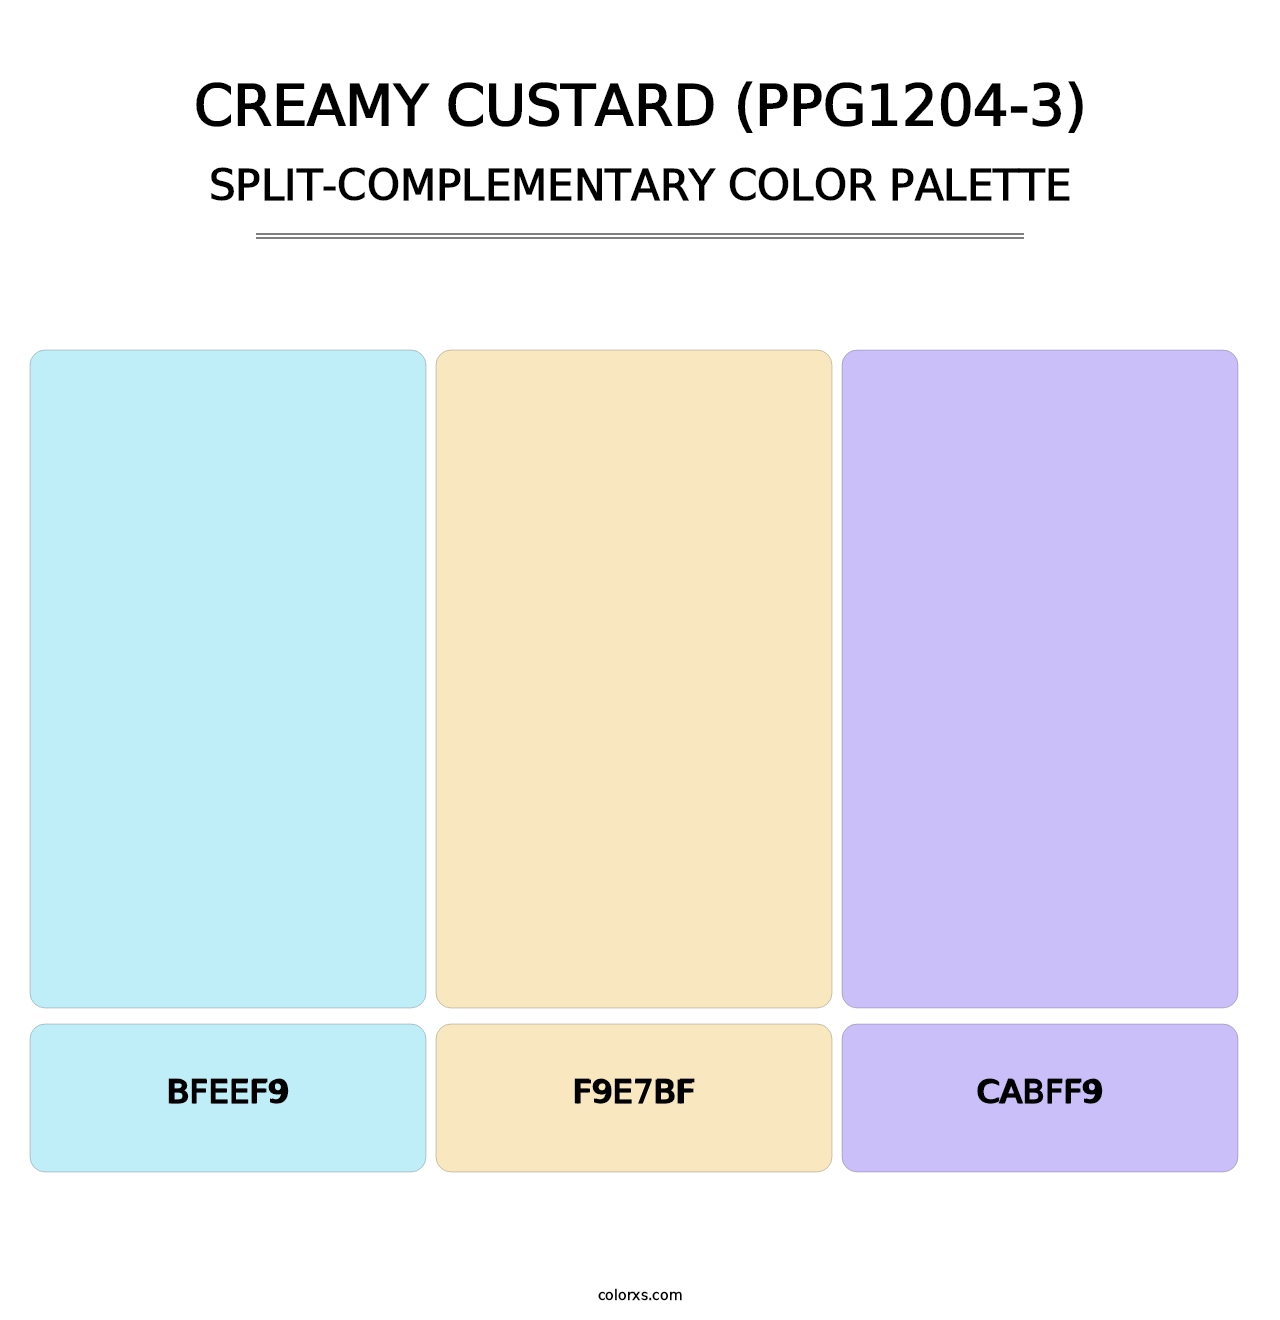 Creamy Custard (PPG1204-3) - Split-Complementary Color Palette